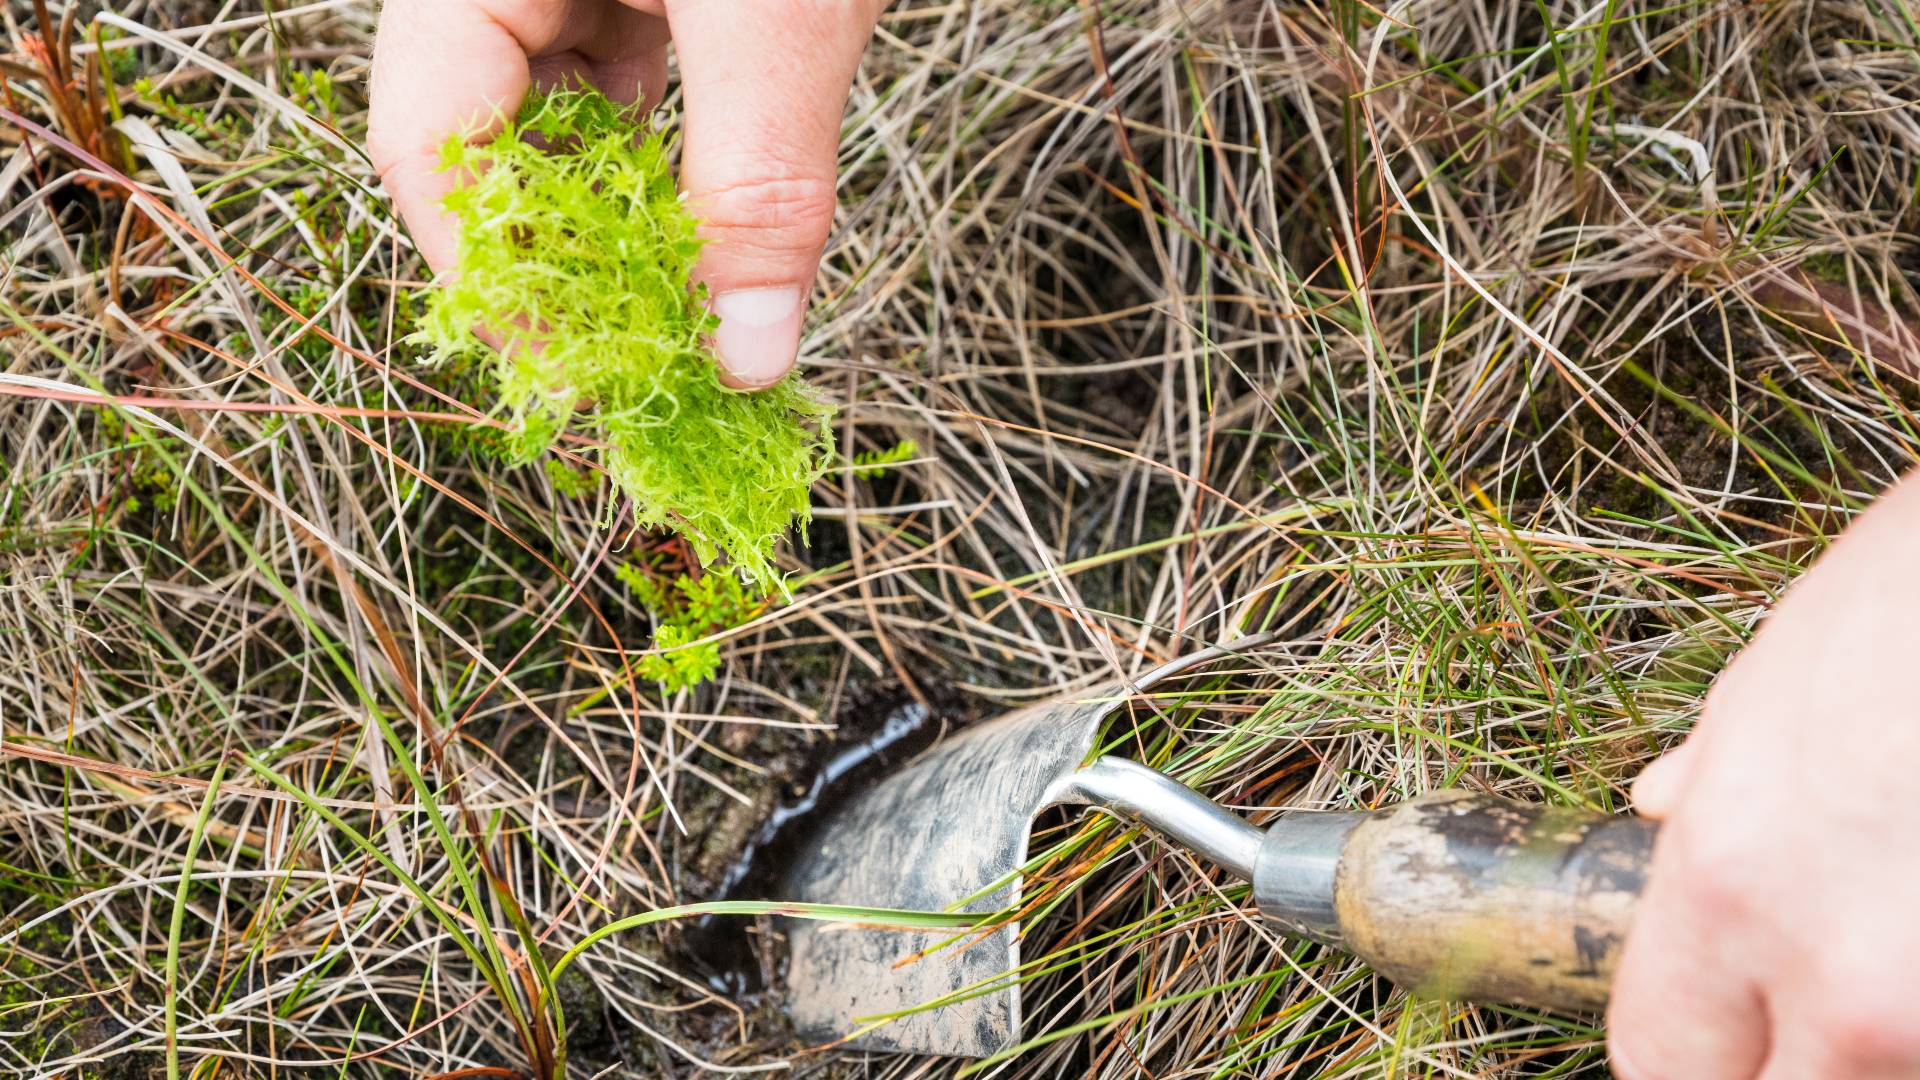 Planting sphagnum moss